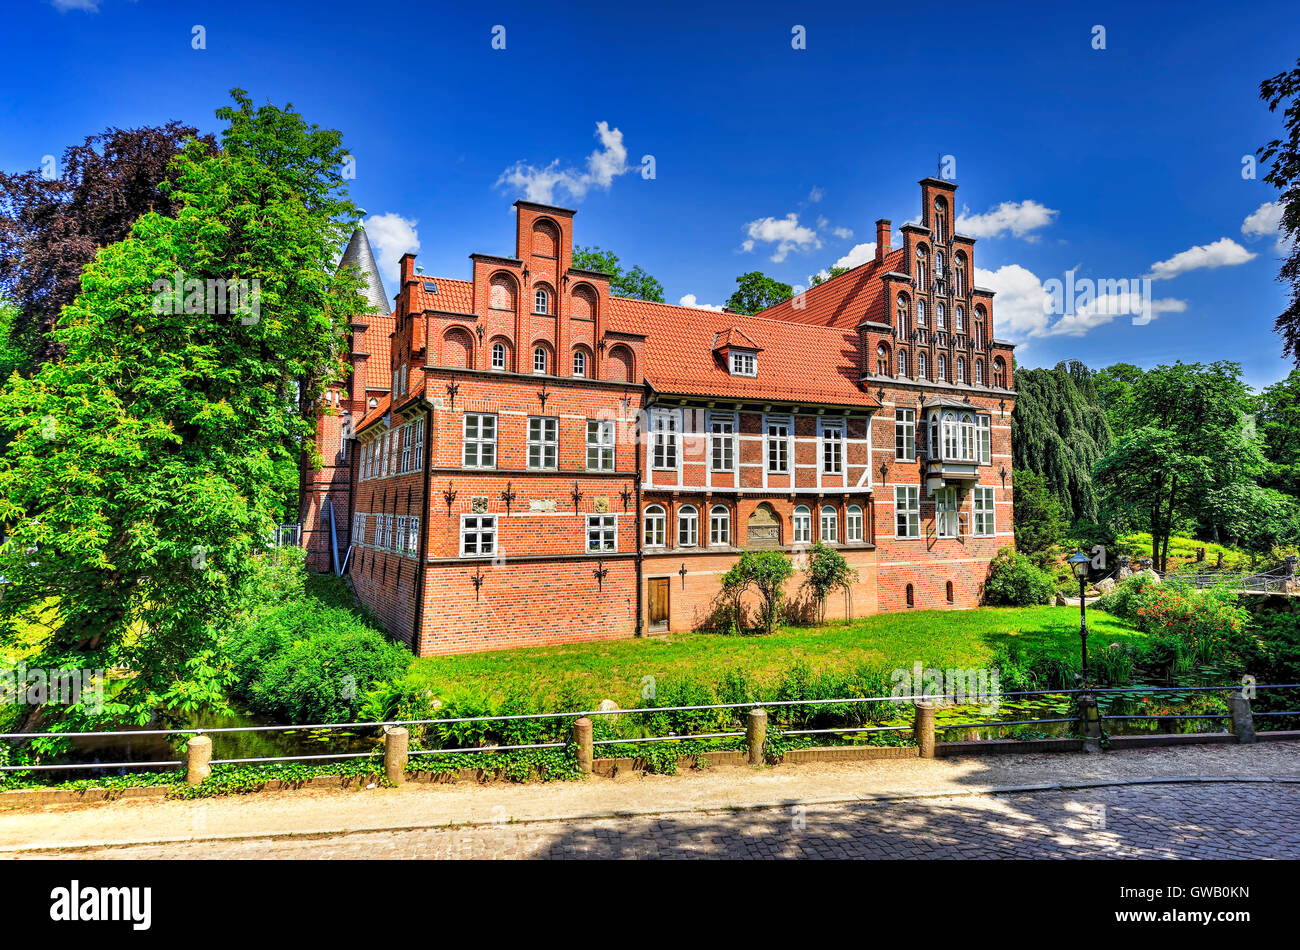 Castle in mountain village, Hamburg, Germany, Europe, Schloss in Bergedorf, Deutschland, Europa Stock Photo